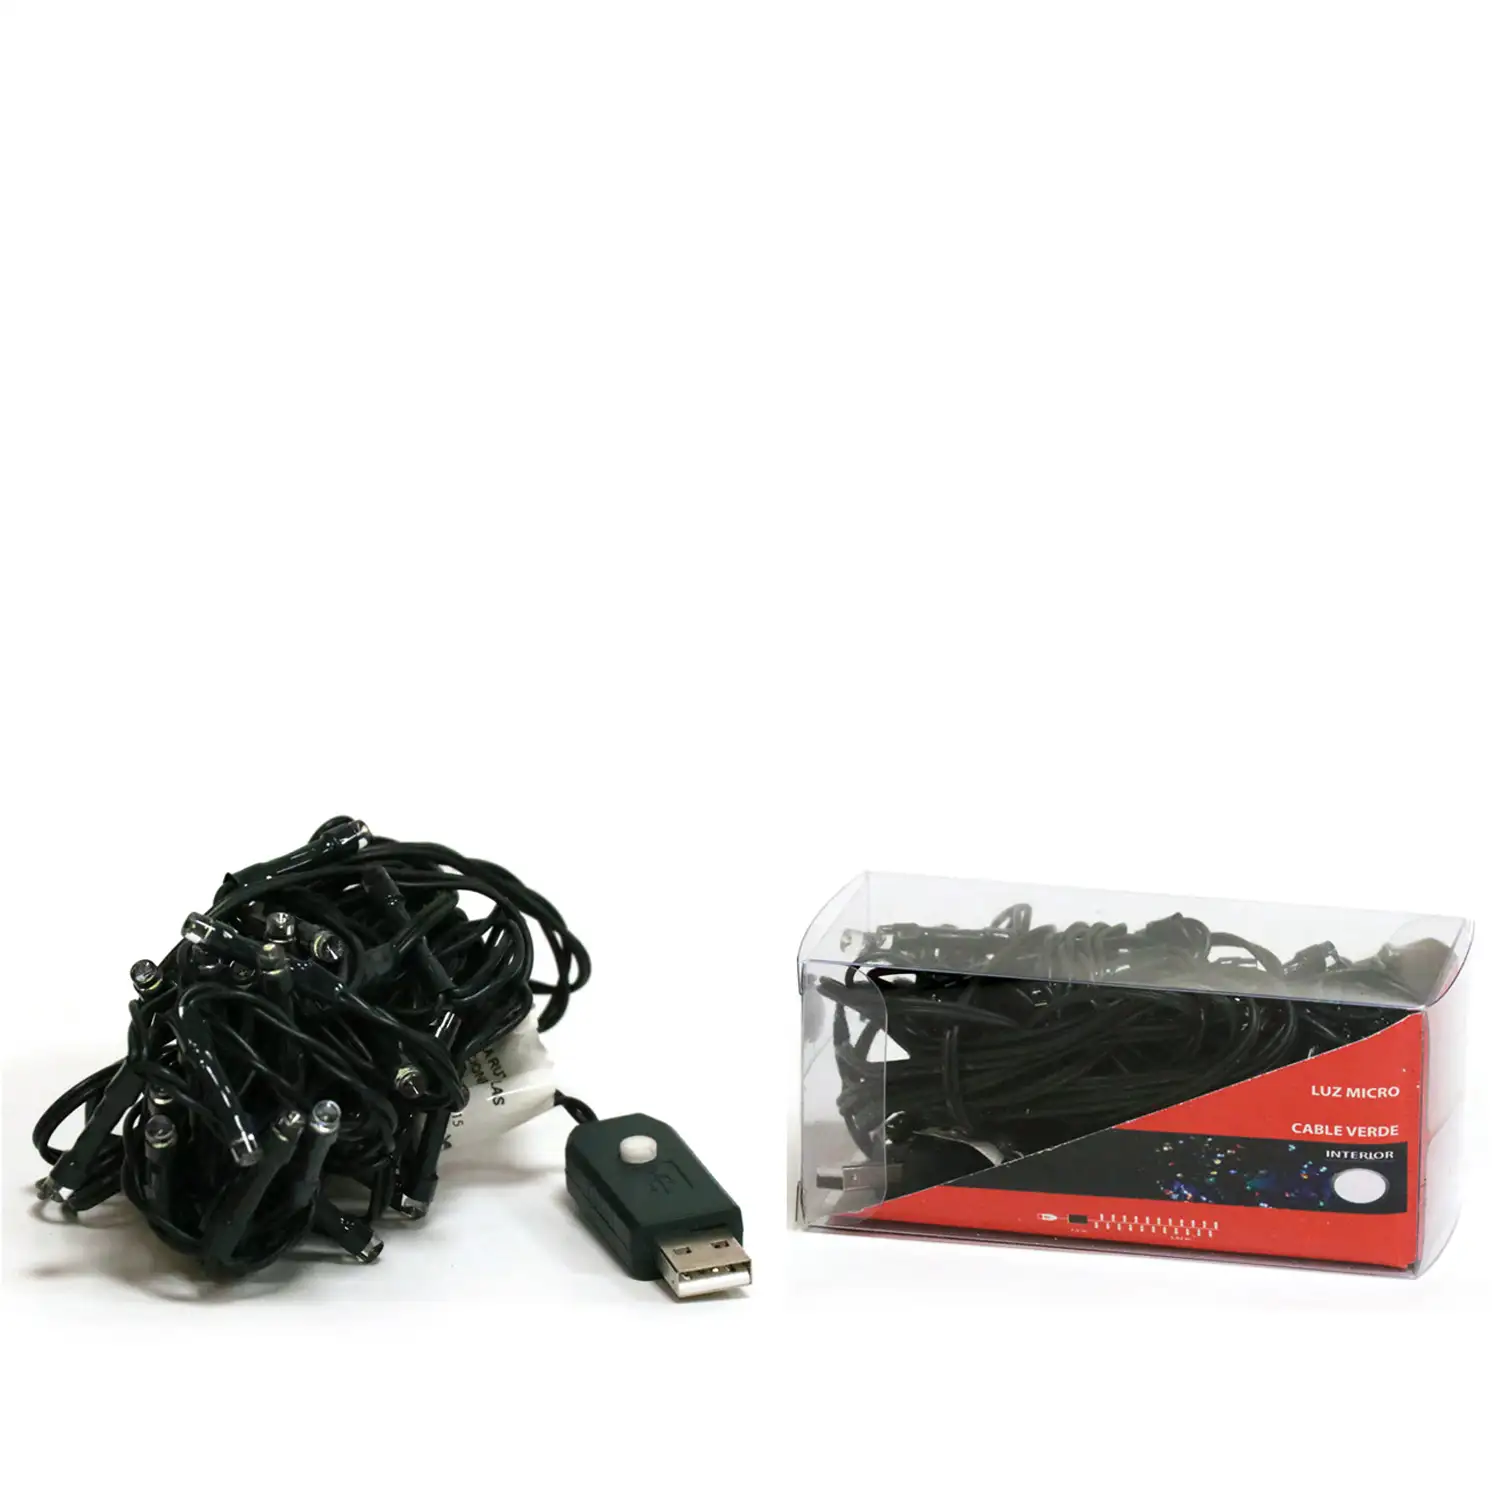 N --LUCES MICRO 100L LED VERDE CON USB CABLE VERDE INTERIOR 7.95M (24)